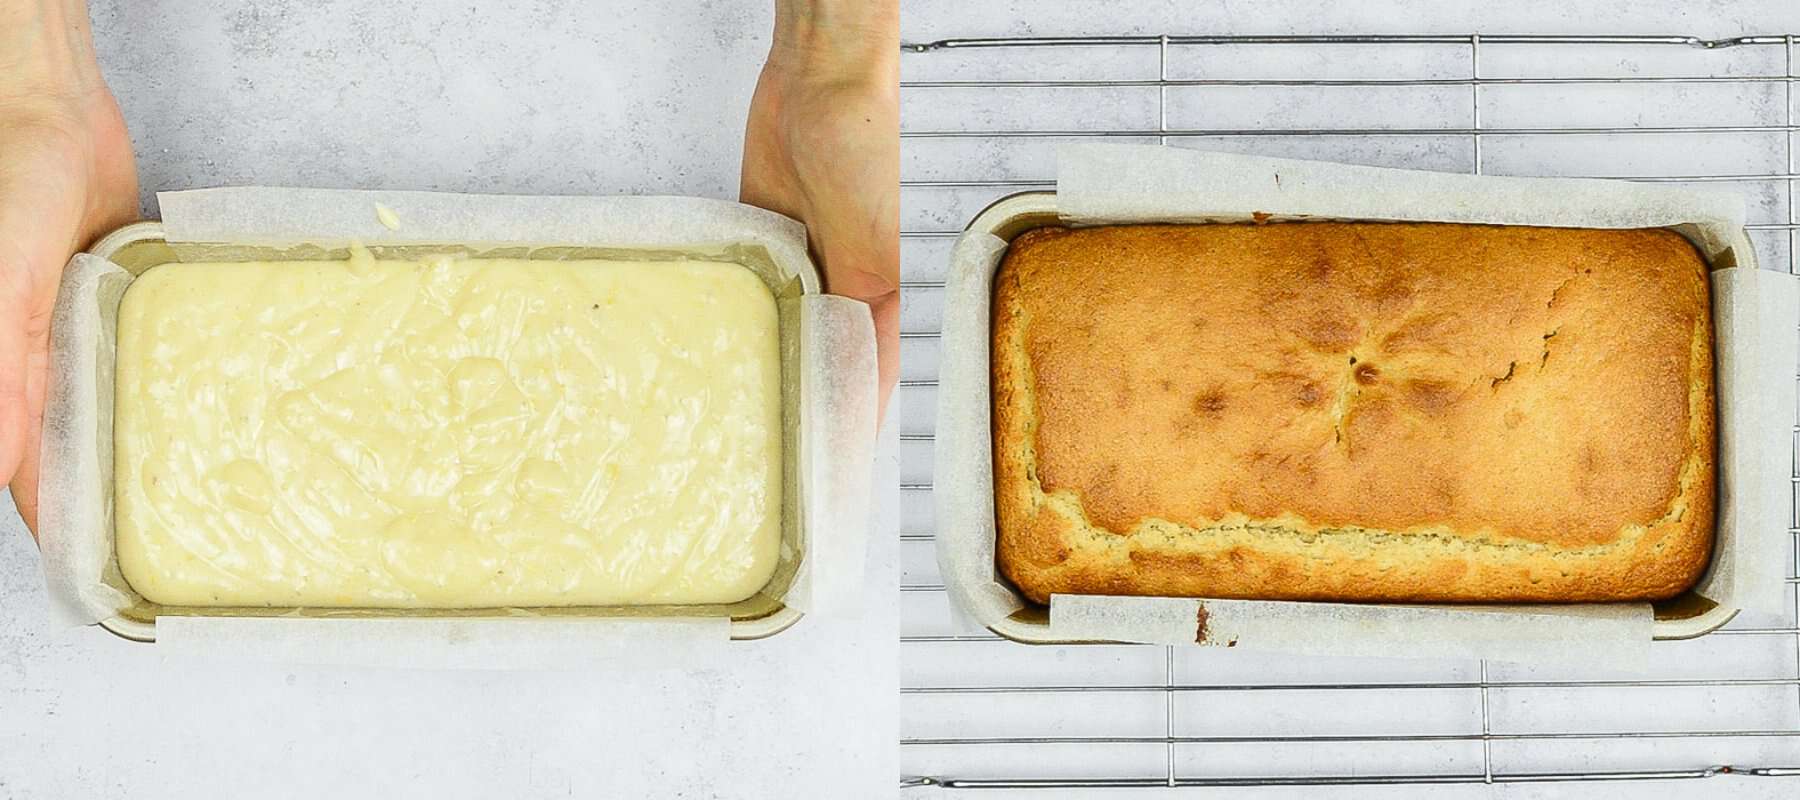 step 2 - baking the cake